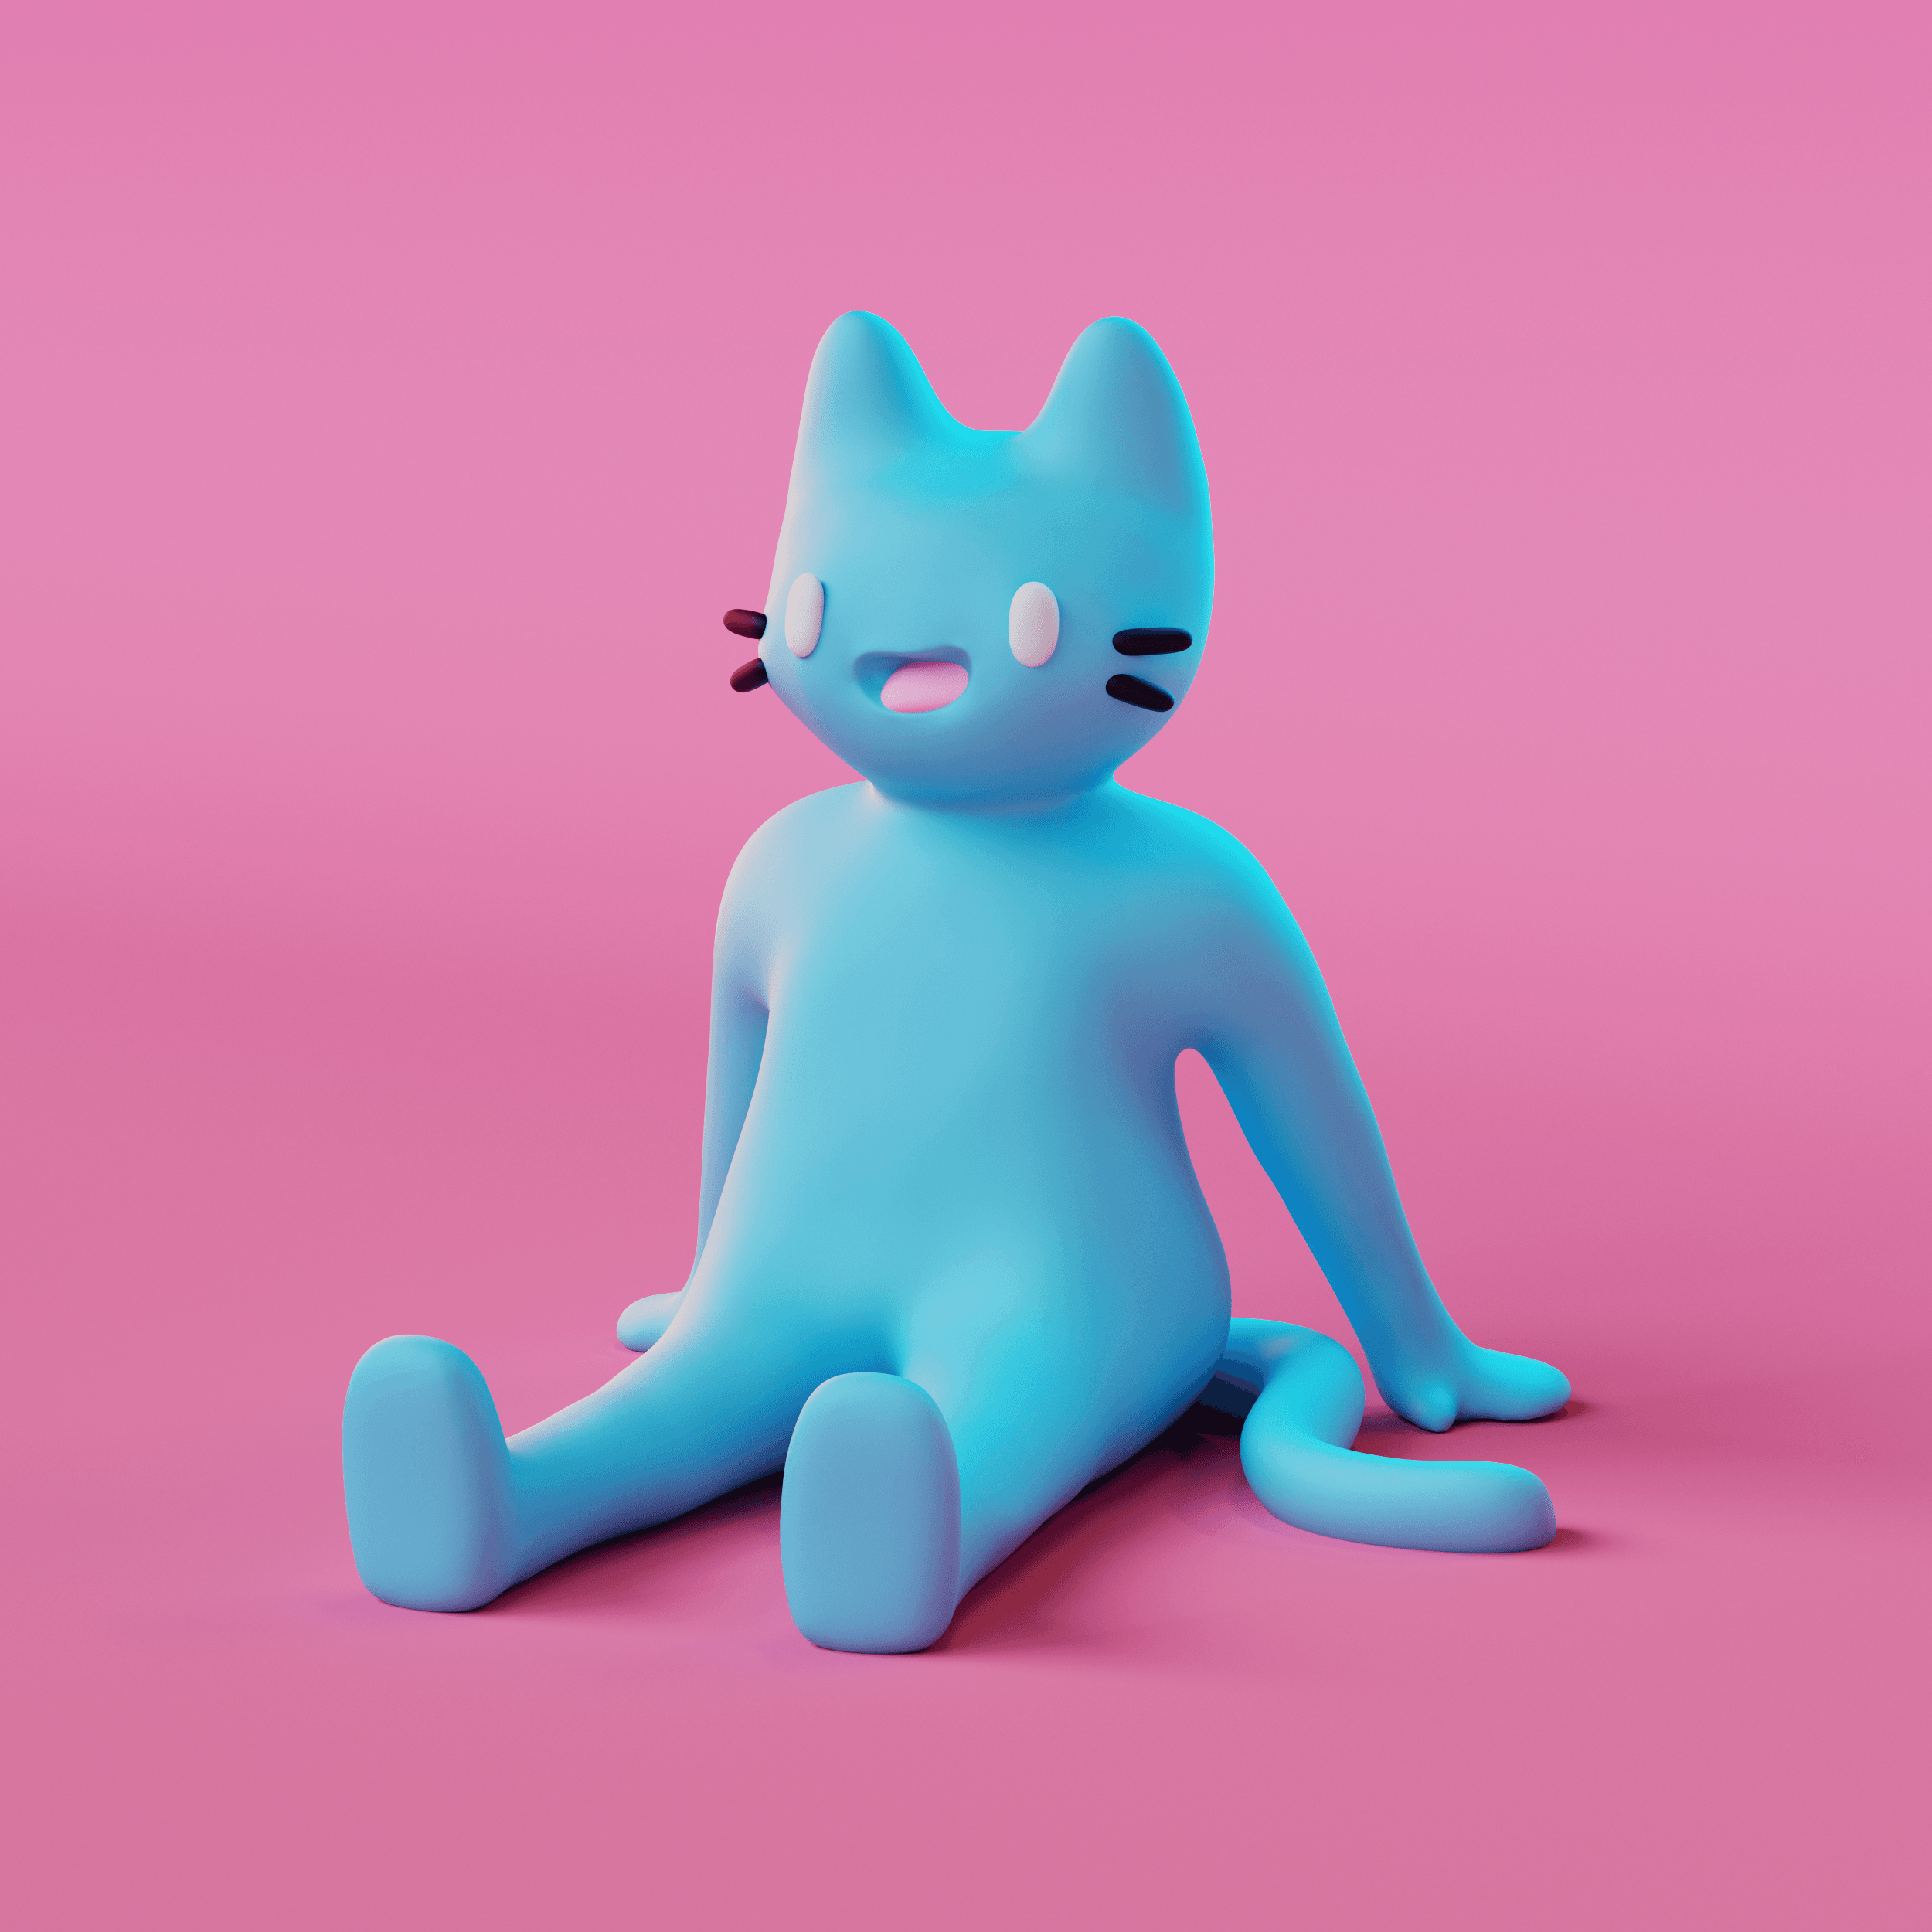 Blue Cat